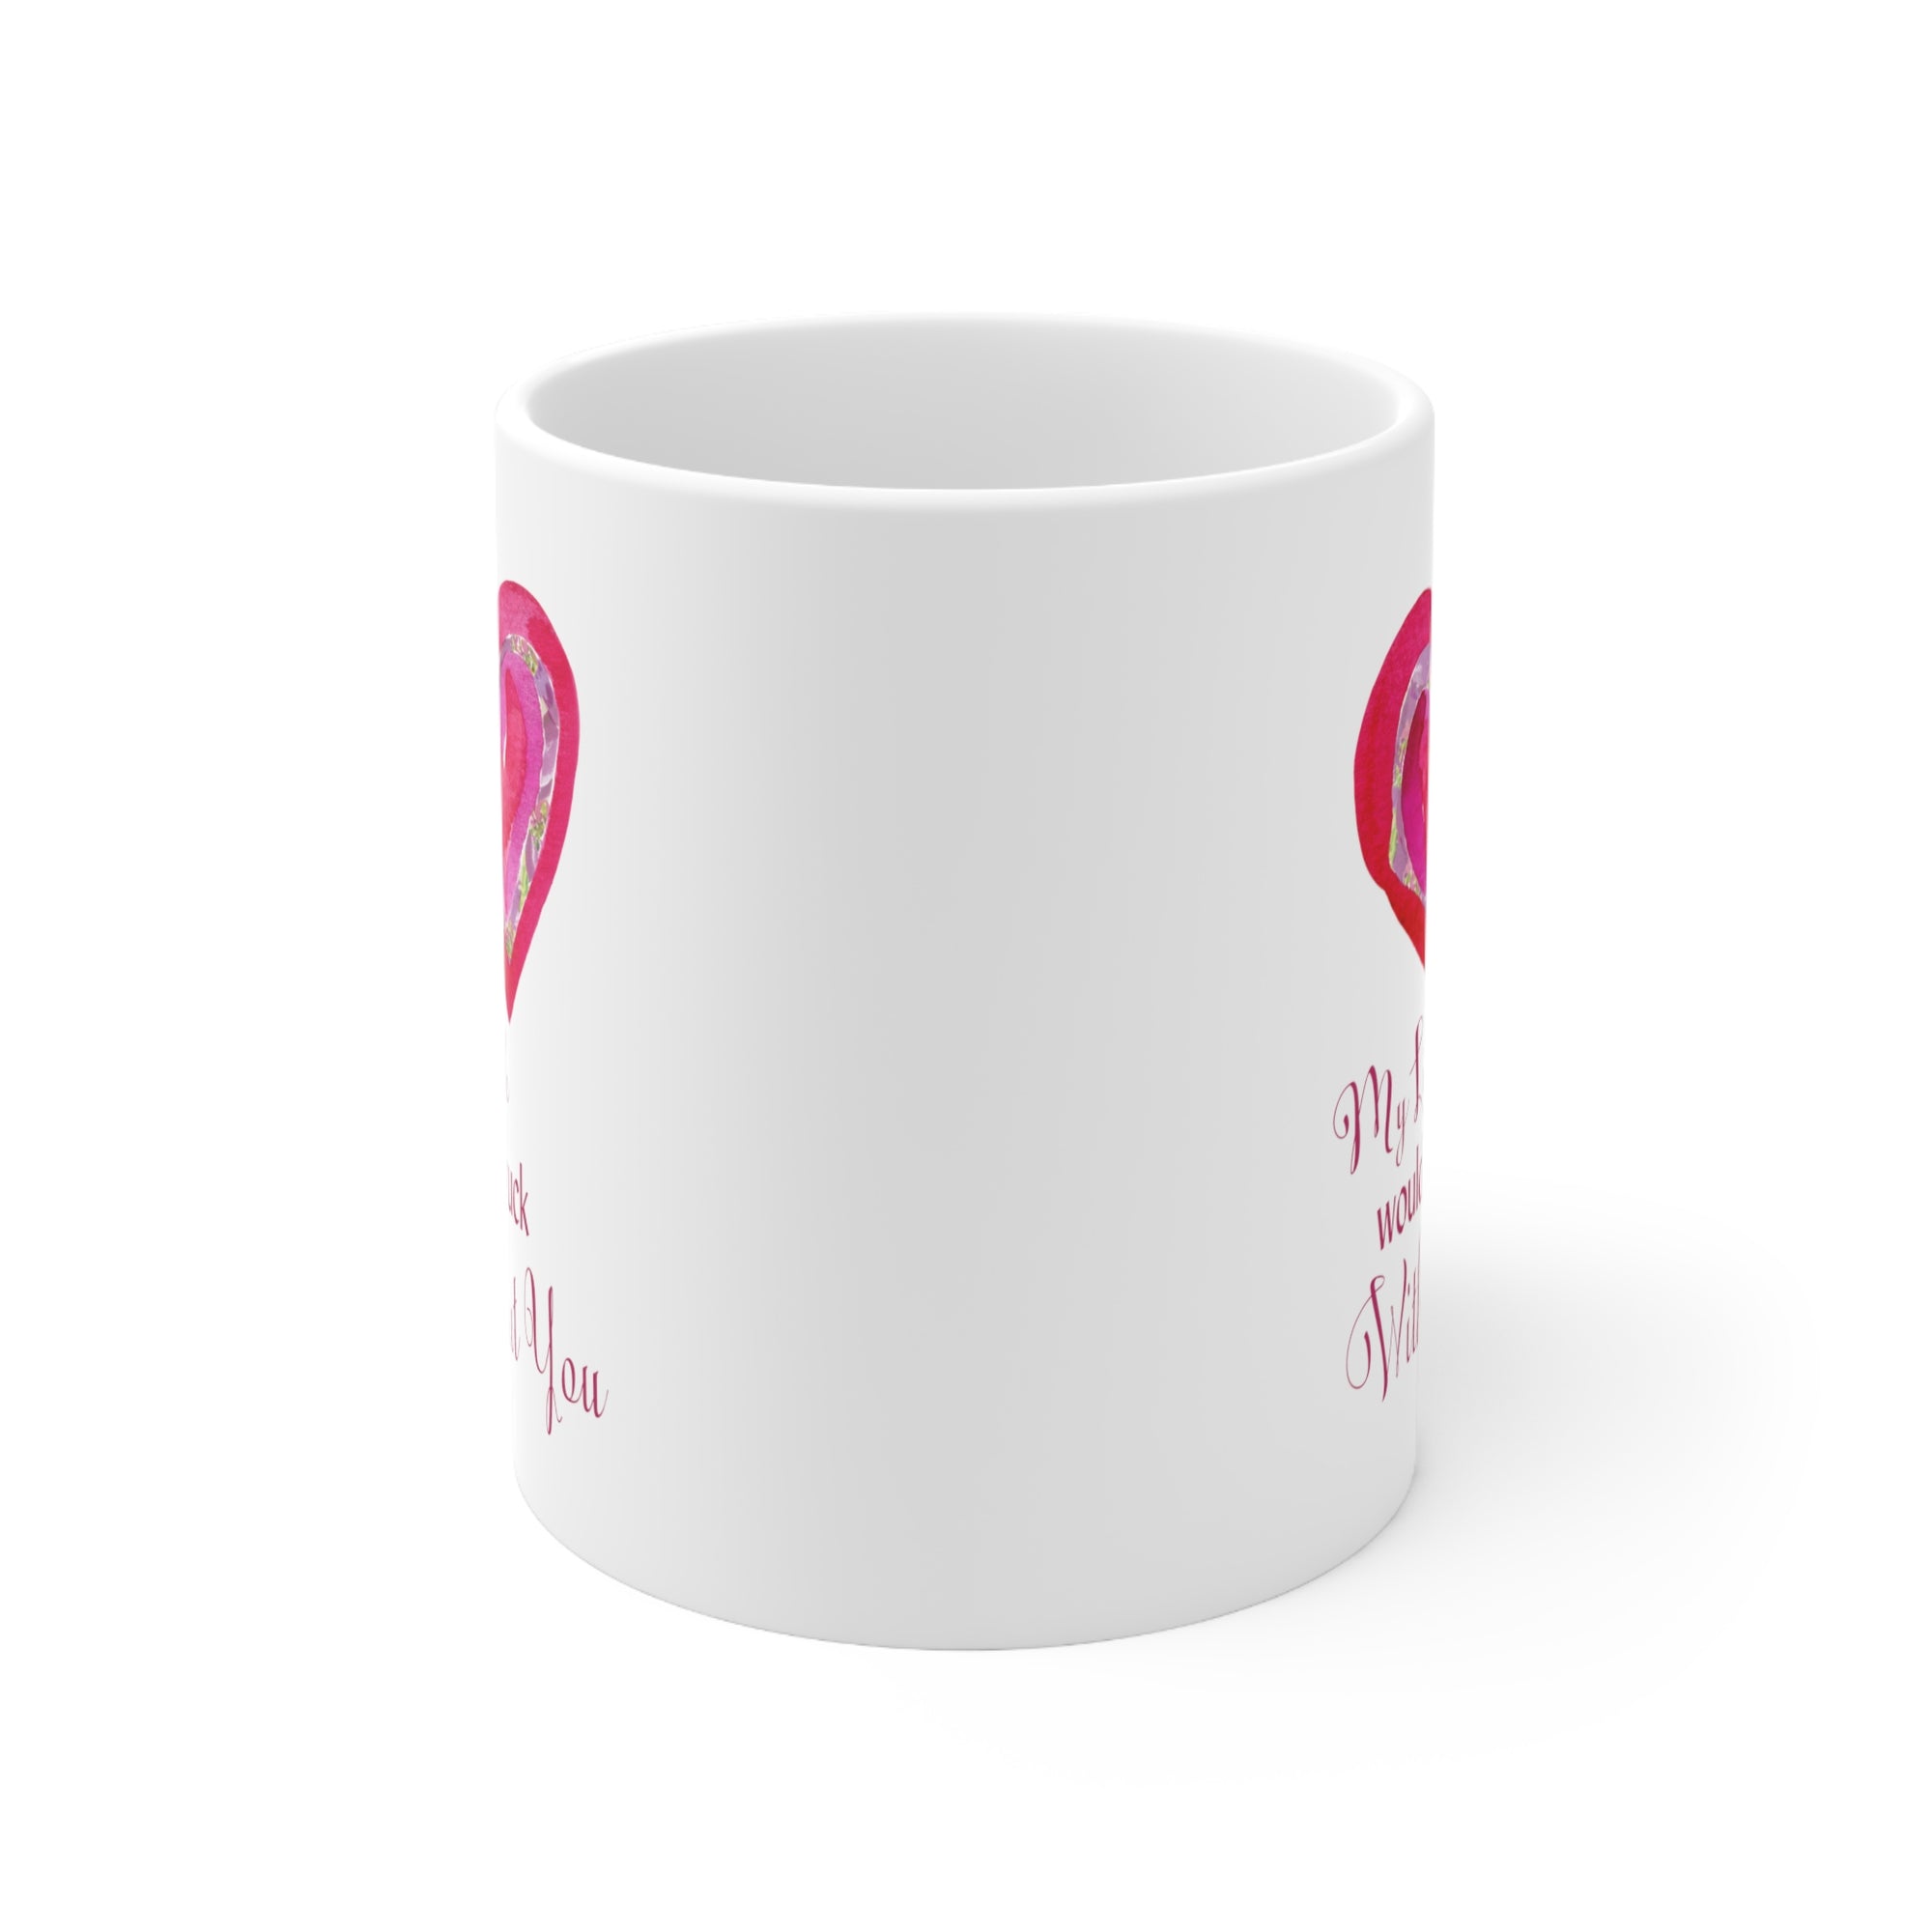 I Love You Mug Ceramic Mug 11oz | Valentine Mug | Anniversary Mug